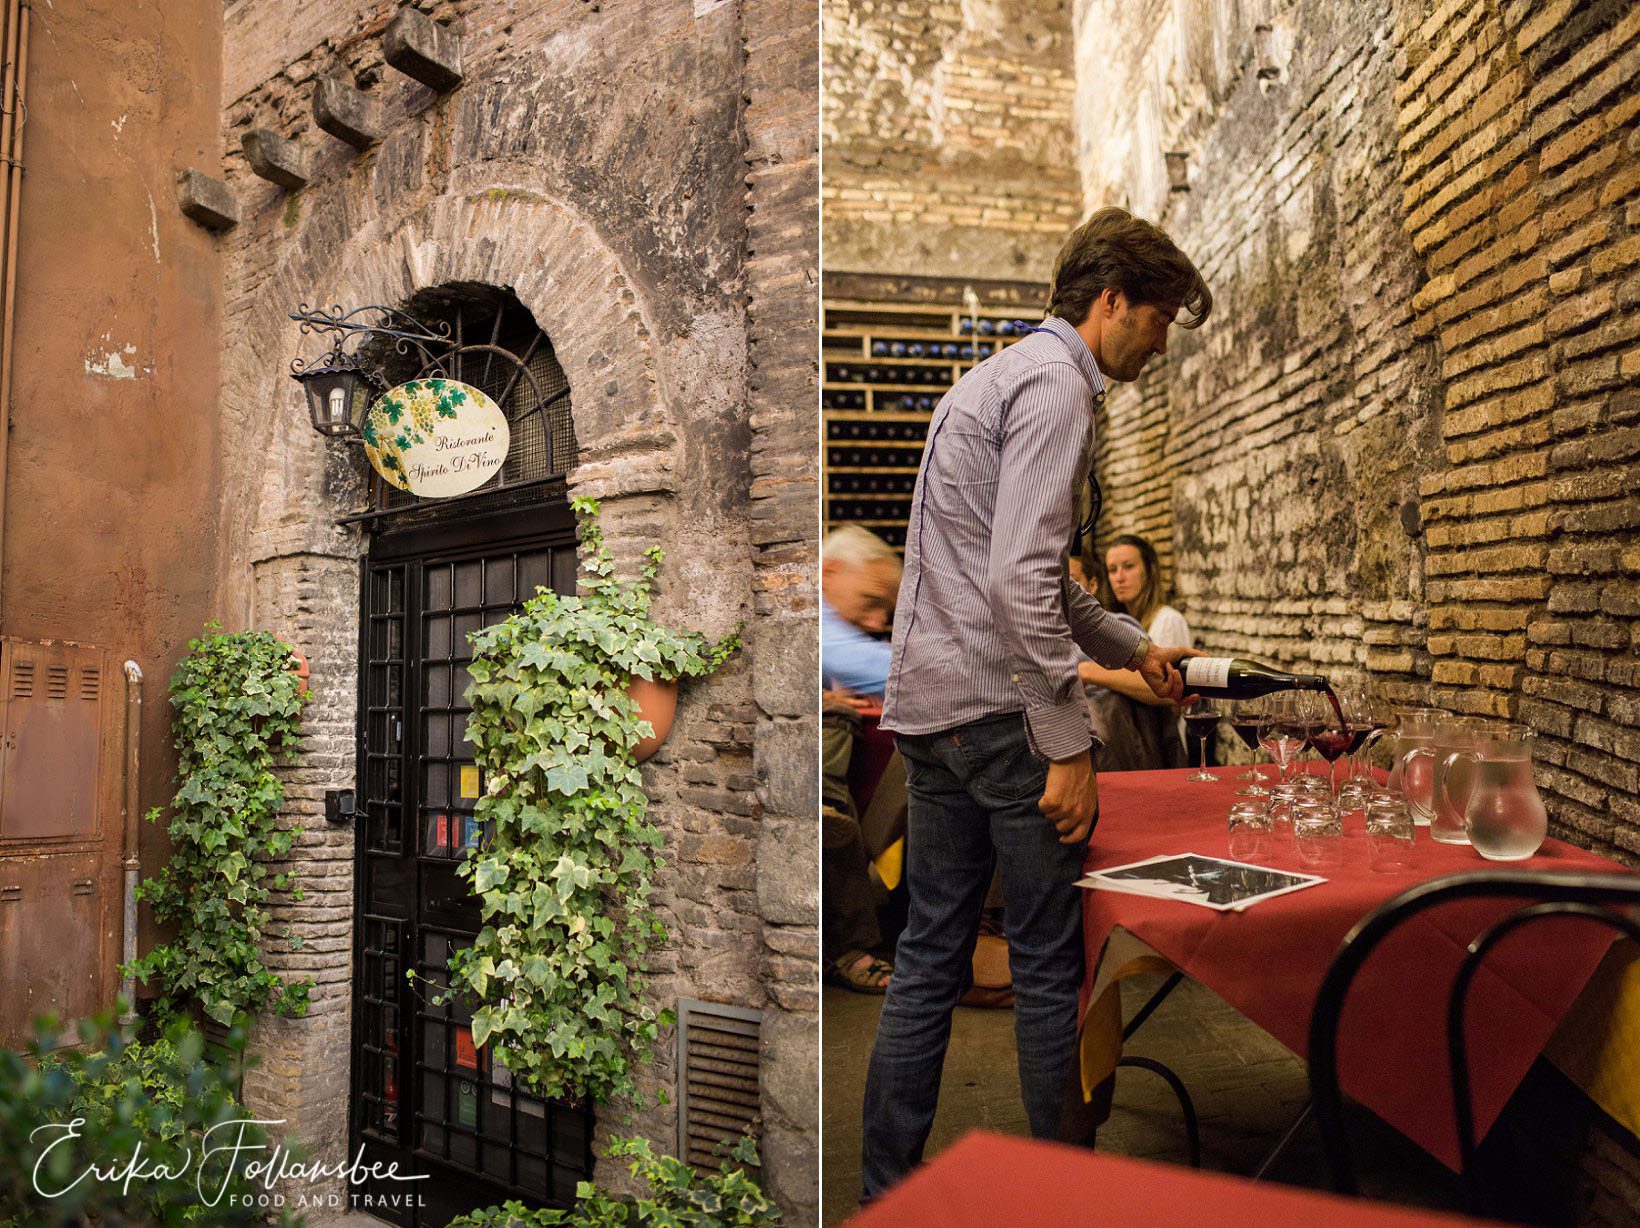 sampling red wine in an ancient underground wine cellar in Trastevere, Rome